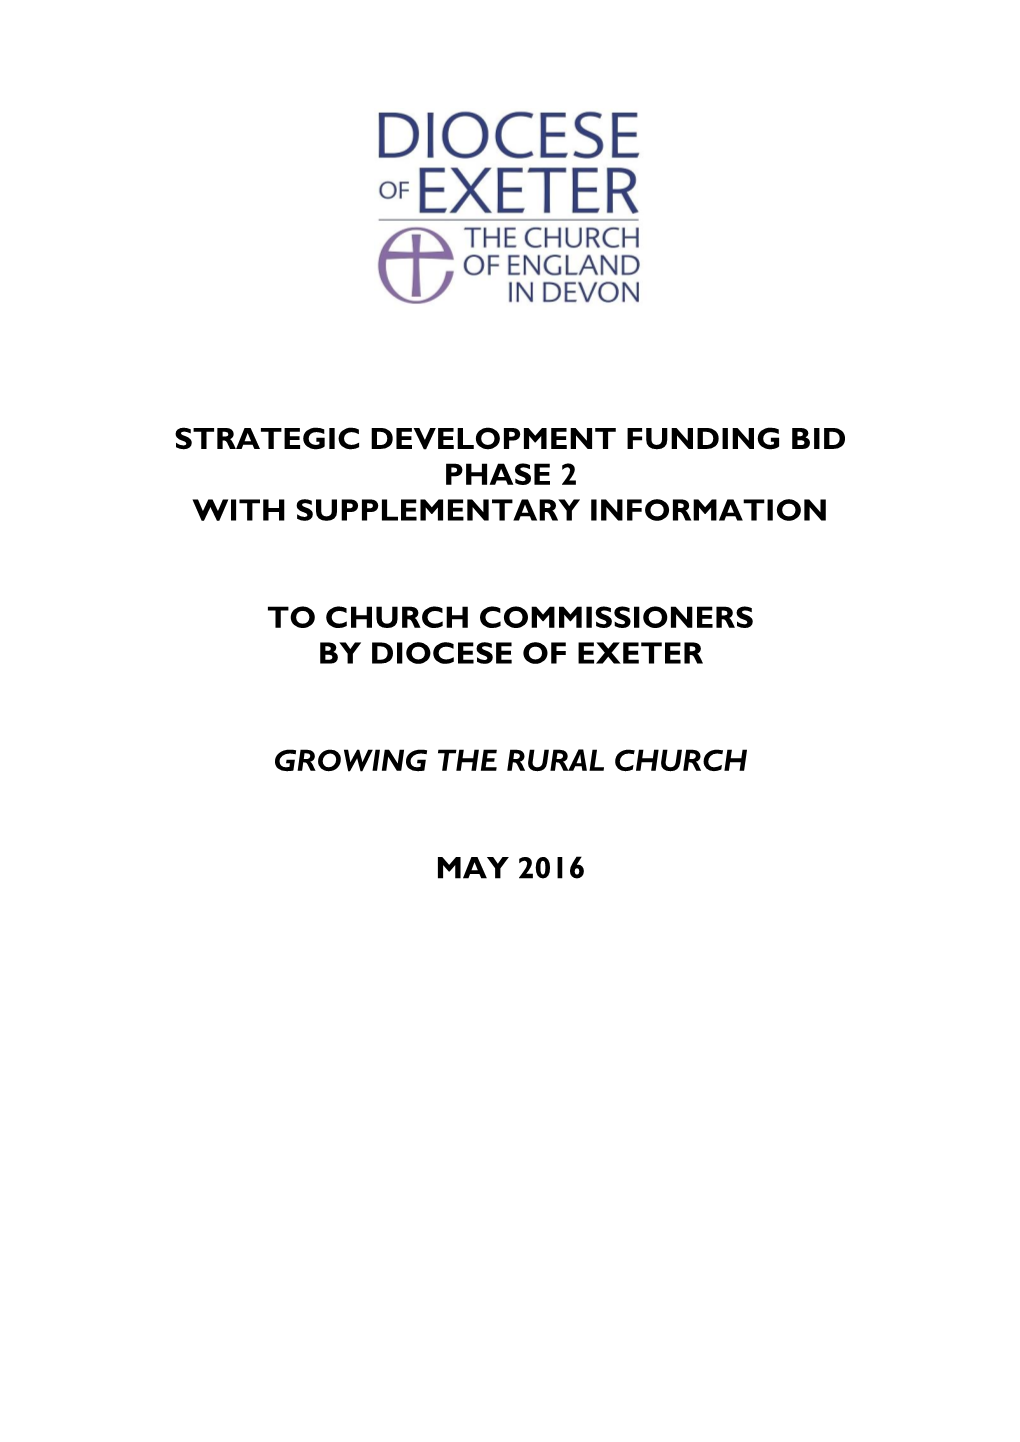 Strategic Development Funding Bid Phase 2 with Supplementary Information